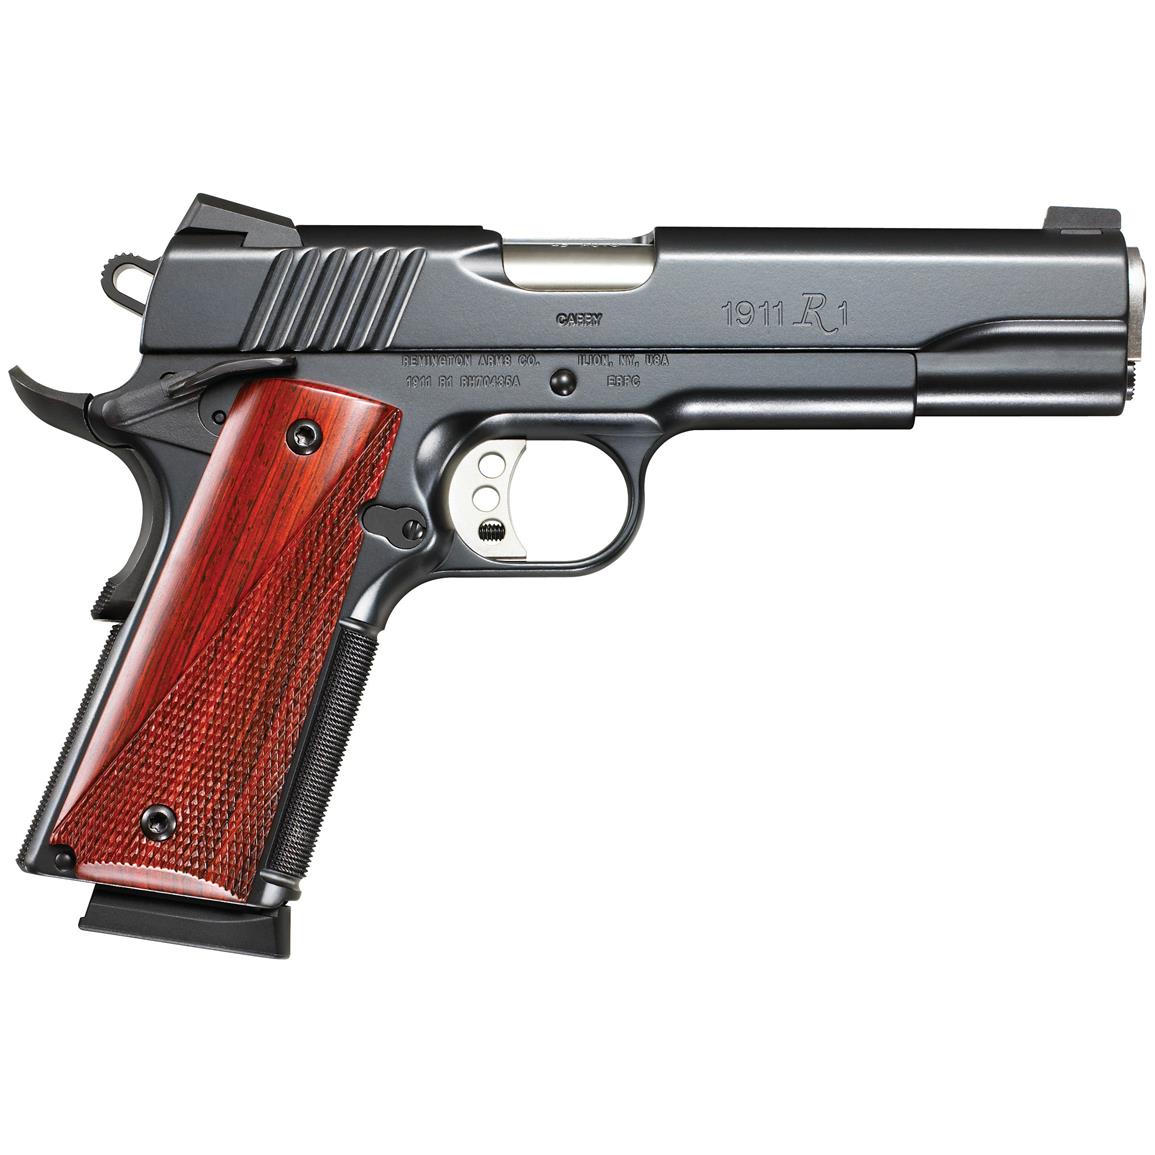 Remington Model 1911 R1 Carry, Semi-automatic, .45 ACP, 96332, 047700863320, Satin Black Oxide Finish